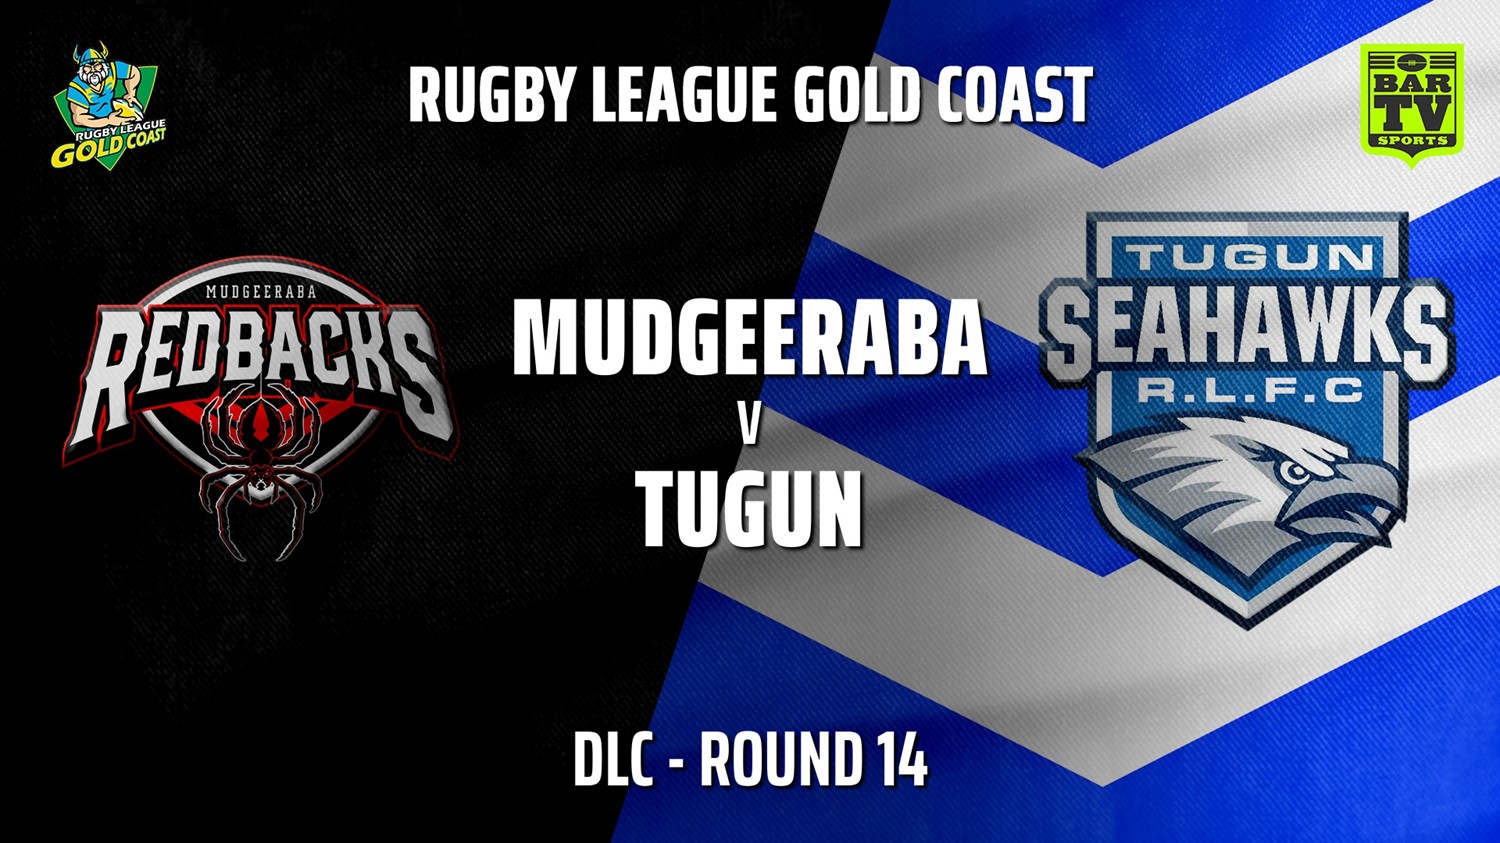 210919-Gold Coast Round 14 - DLC - Mudgeeraba Redbacks v Tugun Seahawks Slate Image